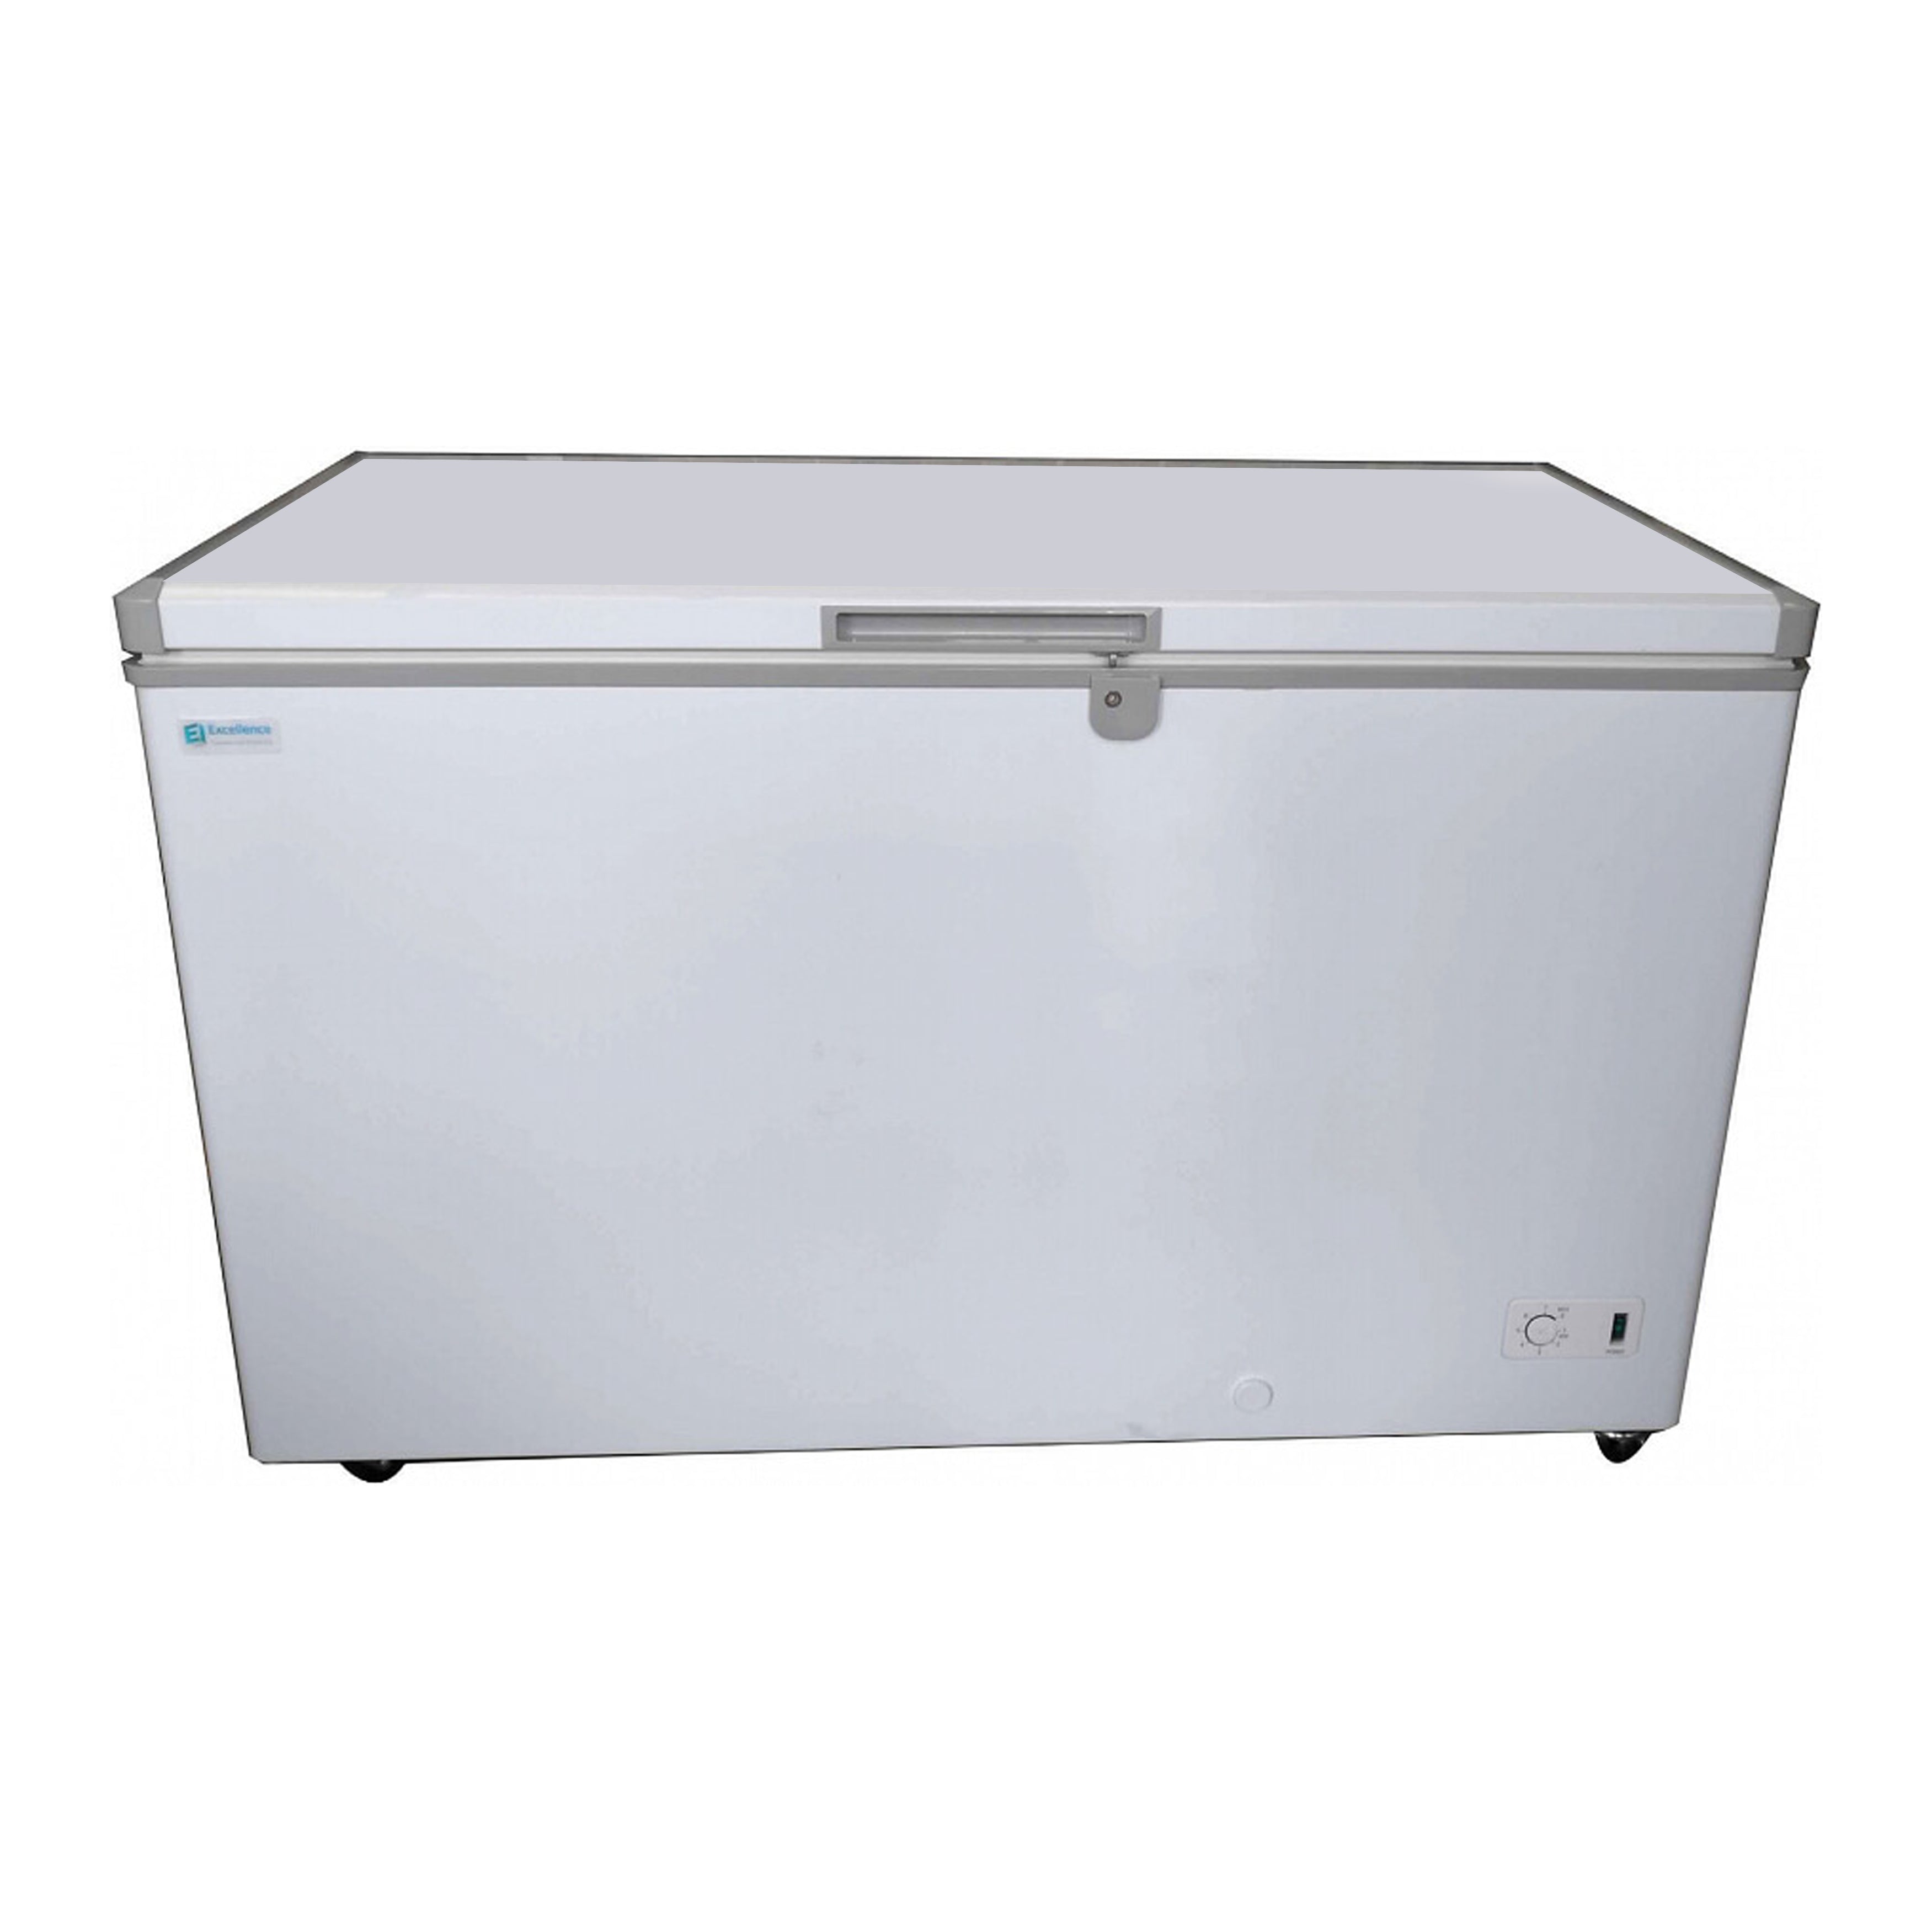 Excellence Industries - BD-11, 43" Commercial Chest Freezer 1 Solid Door 10.7 cu. ft.